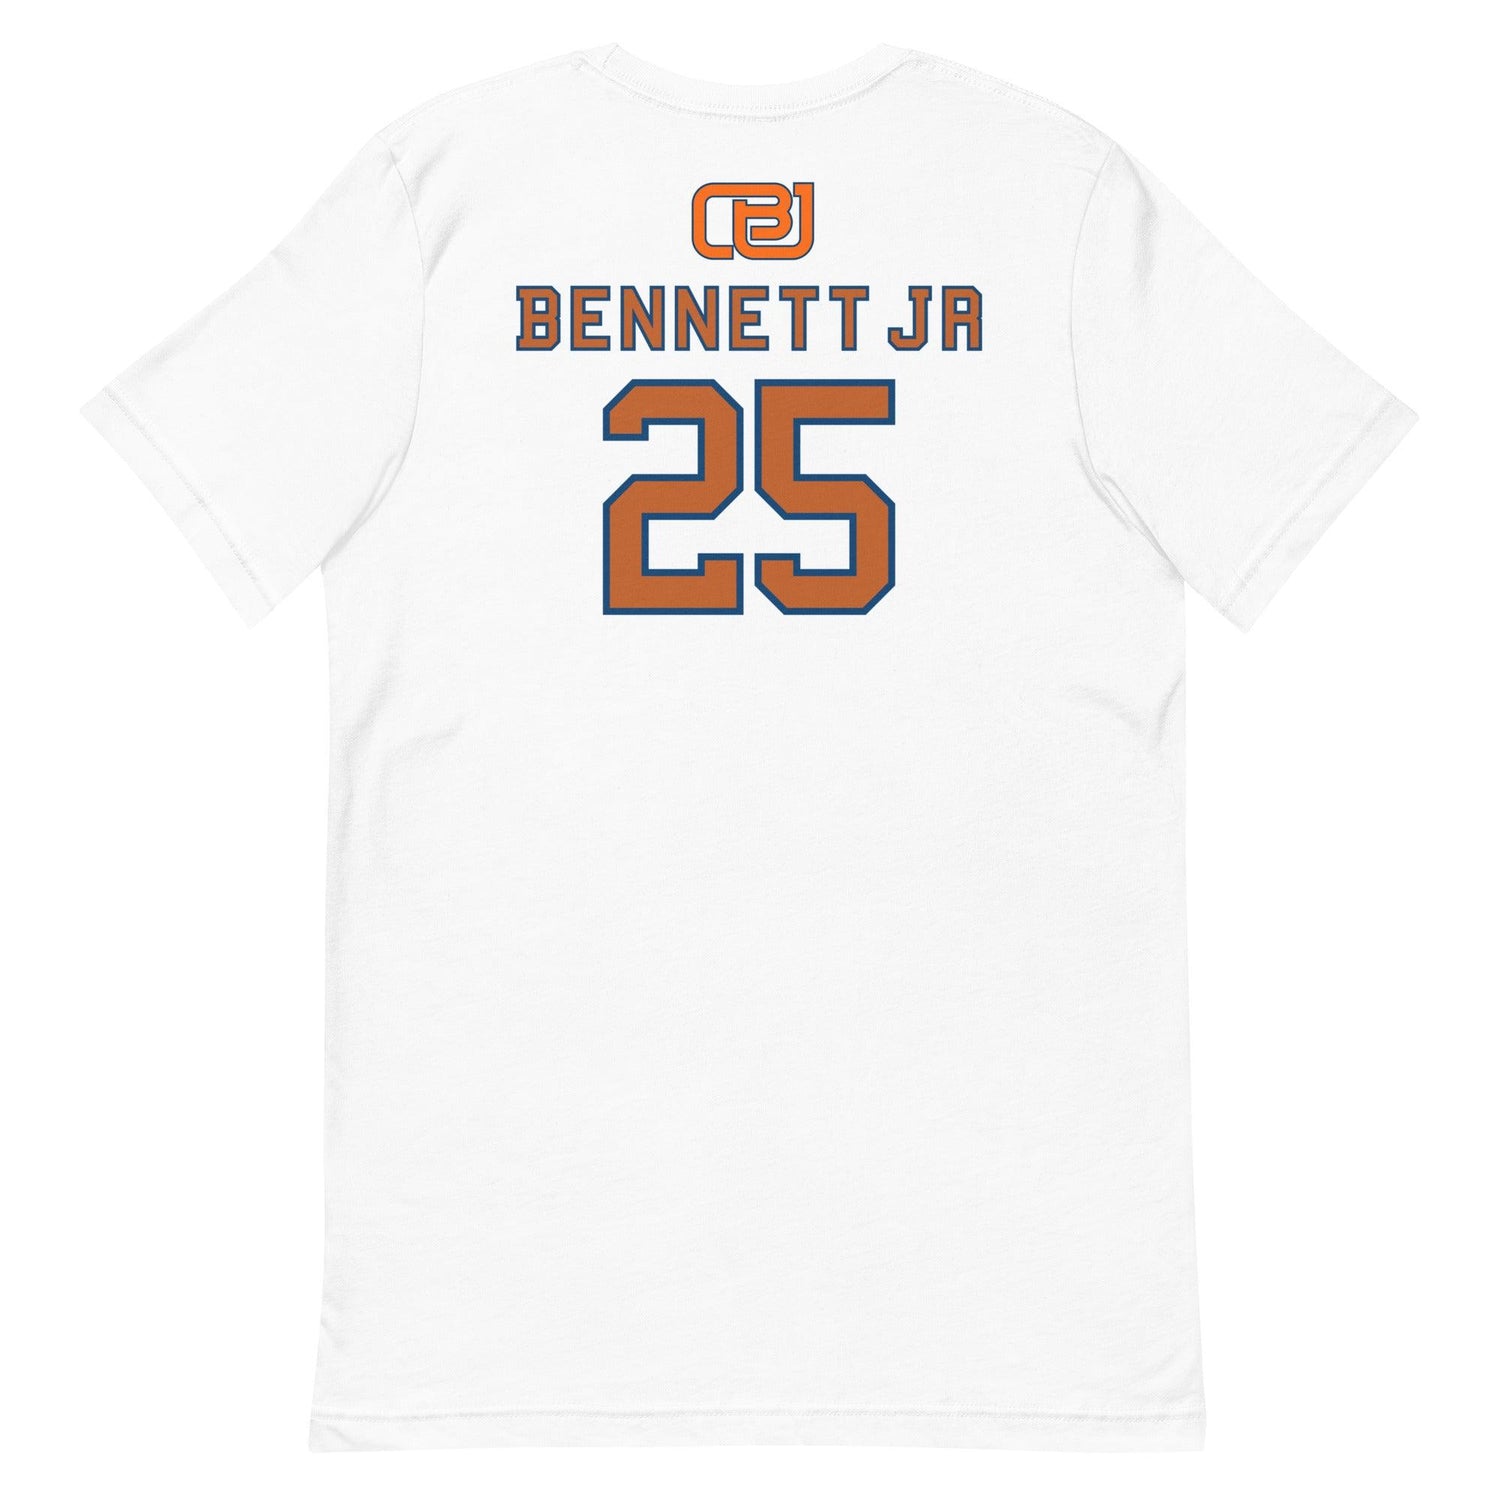 Chico Bennett Jr. "Jersey" t-shirt - Fan Arch